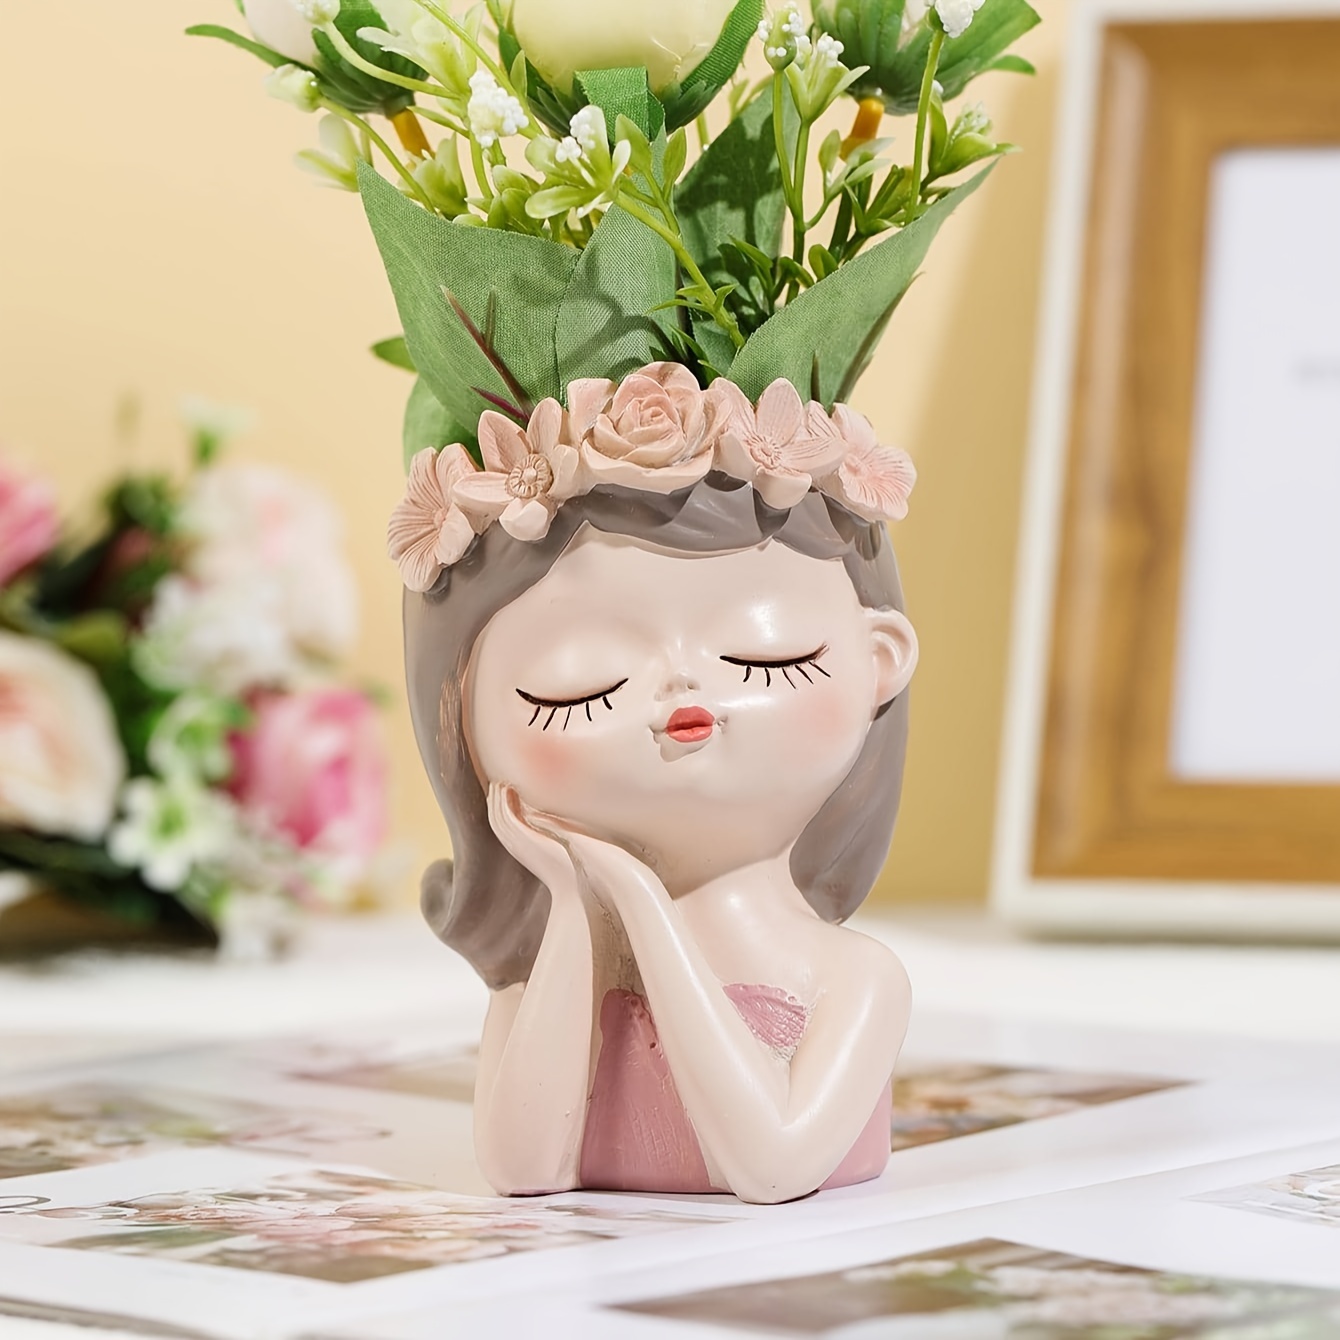 

1pc, Resin Flower Vase, Girl Figurine Design, Decorative Plant Pot, Home Decor, Table Centerpiece, Indoor Accent, Pink Floral Decor